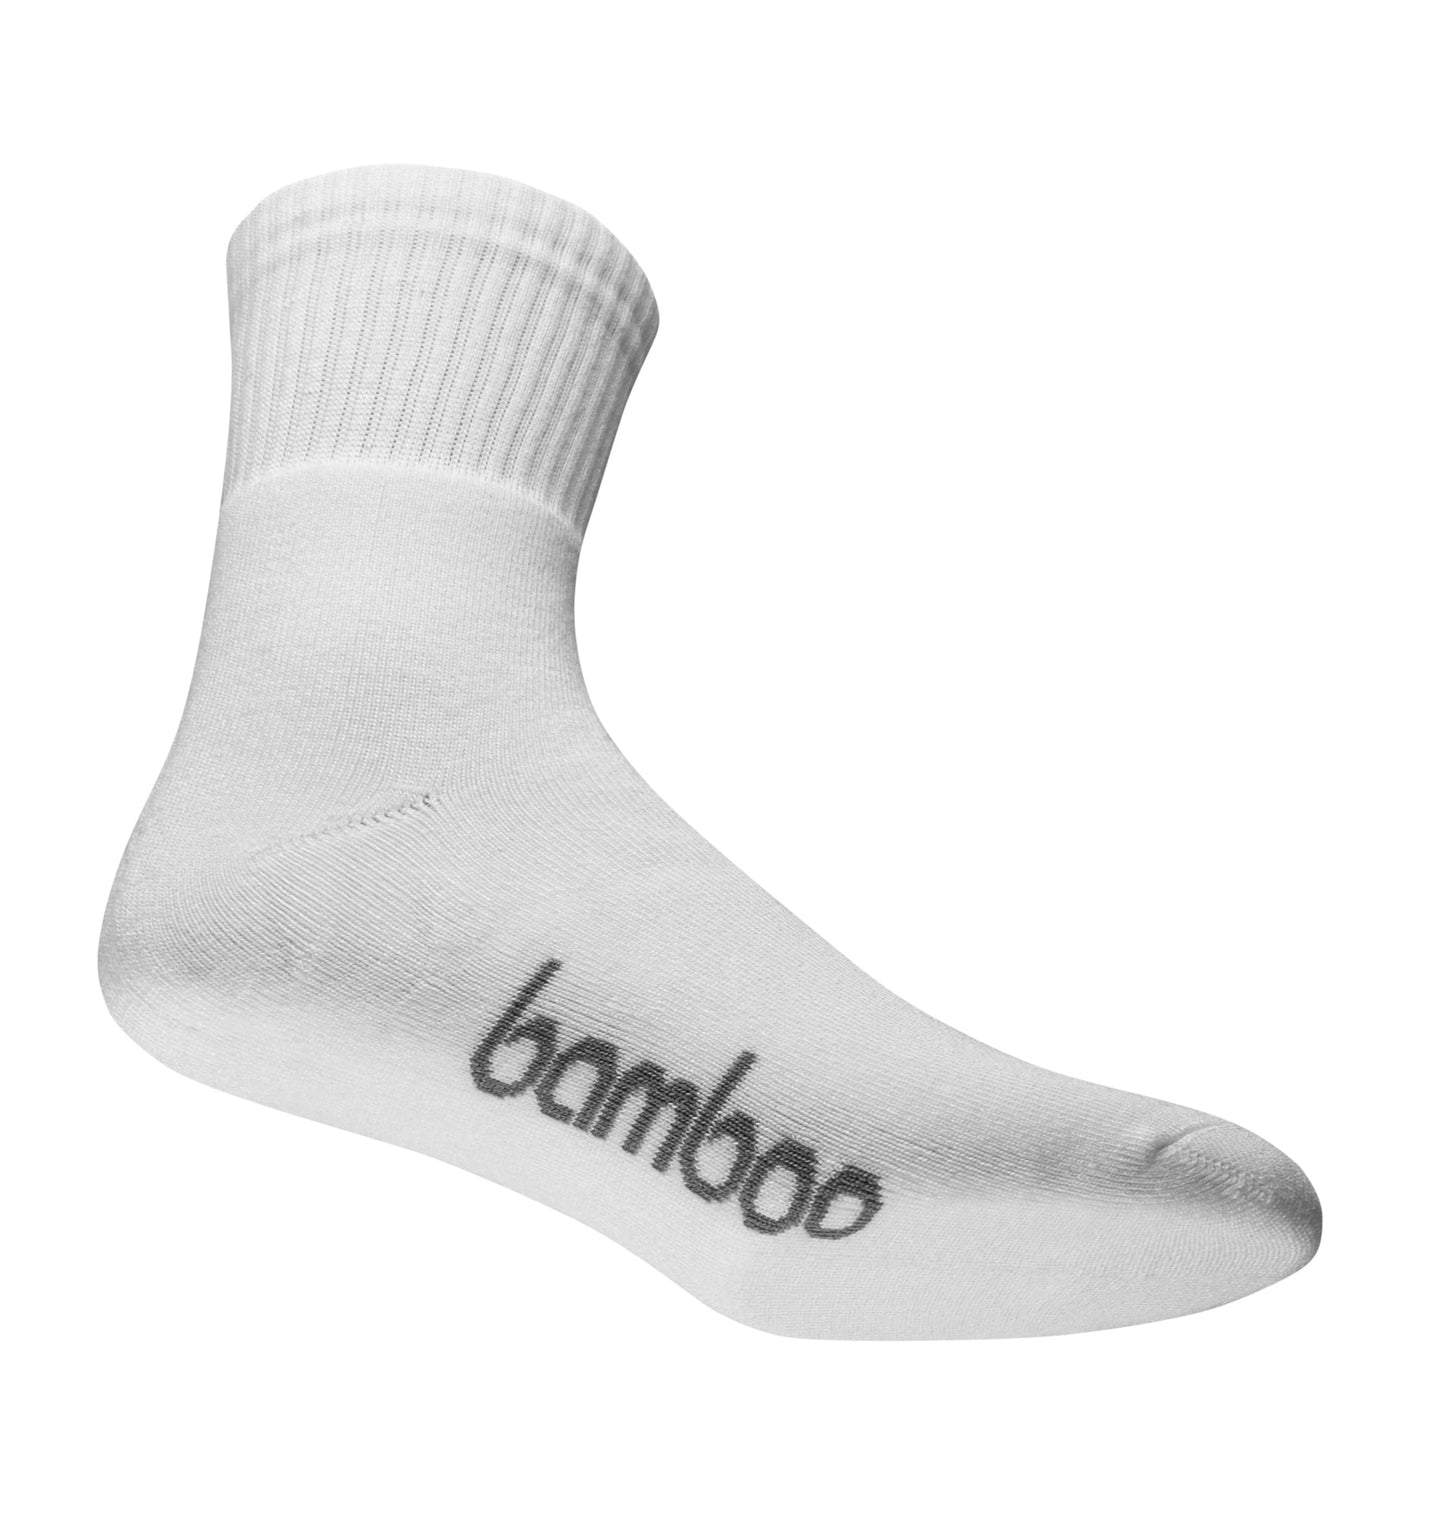 Bamboo Sports Crew Socks Socks Bamboo Textiles White M4-6 W6-8 